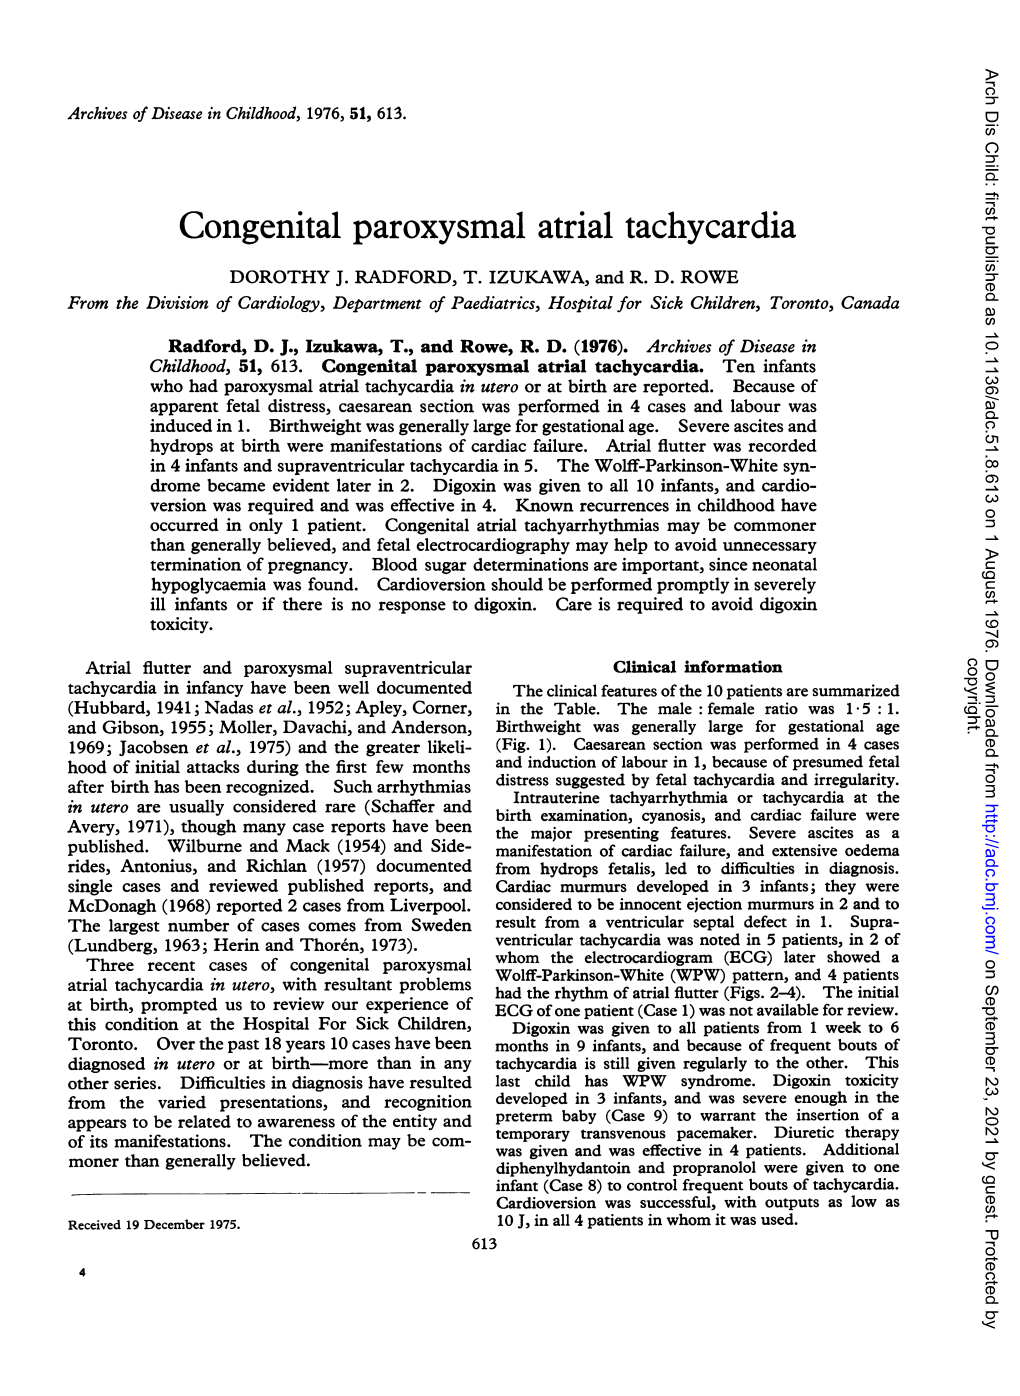 Congenital Paroxysmal Atrial Tachycardia DOROTHY J